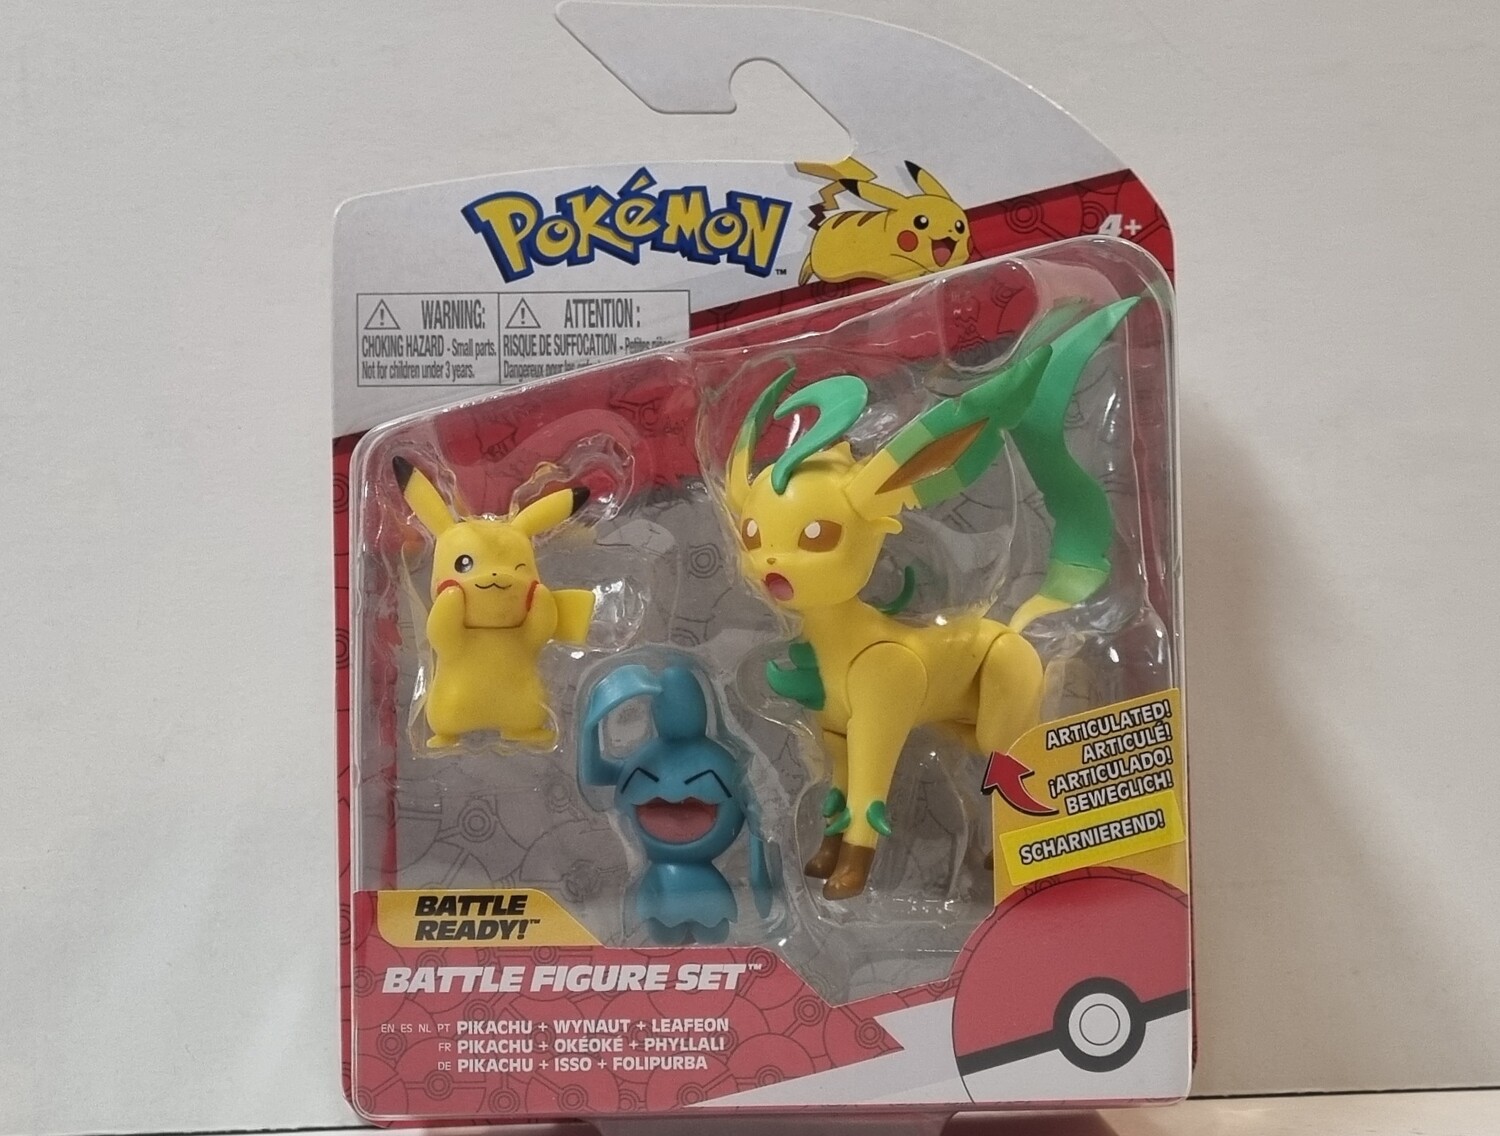 Actiefiguren, Pikachu, Wynaut en Leafeon, Battle Figure Set 3-Pack, Pokémon